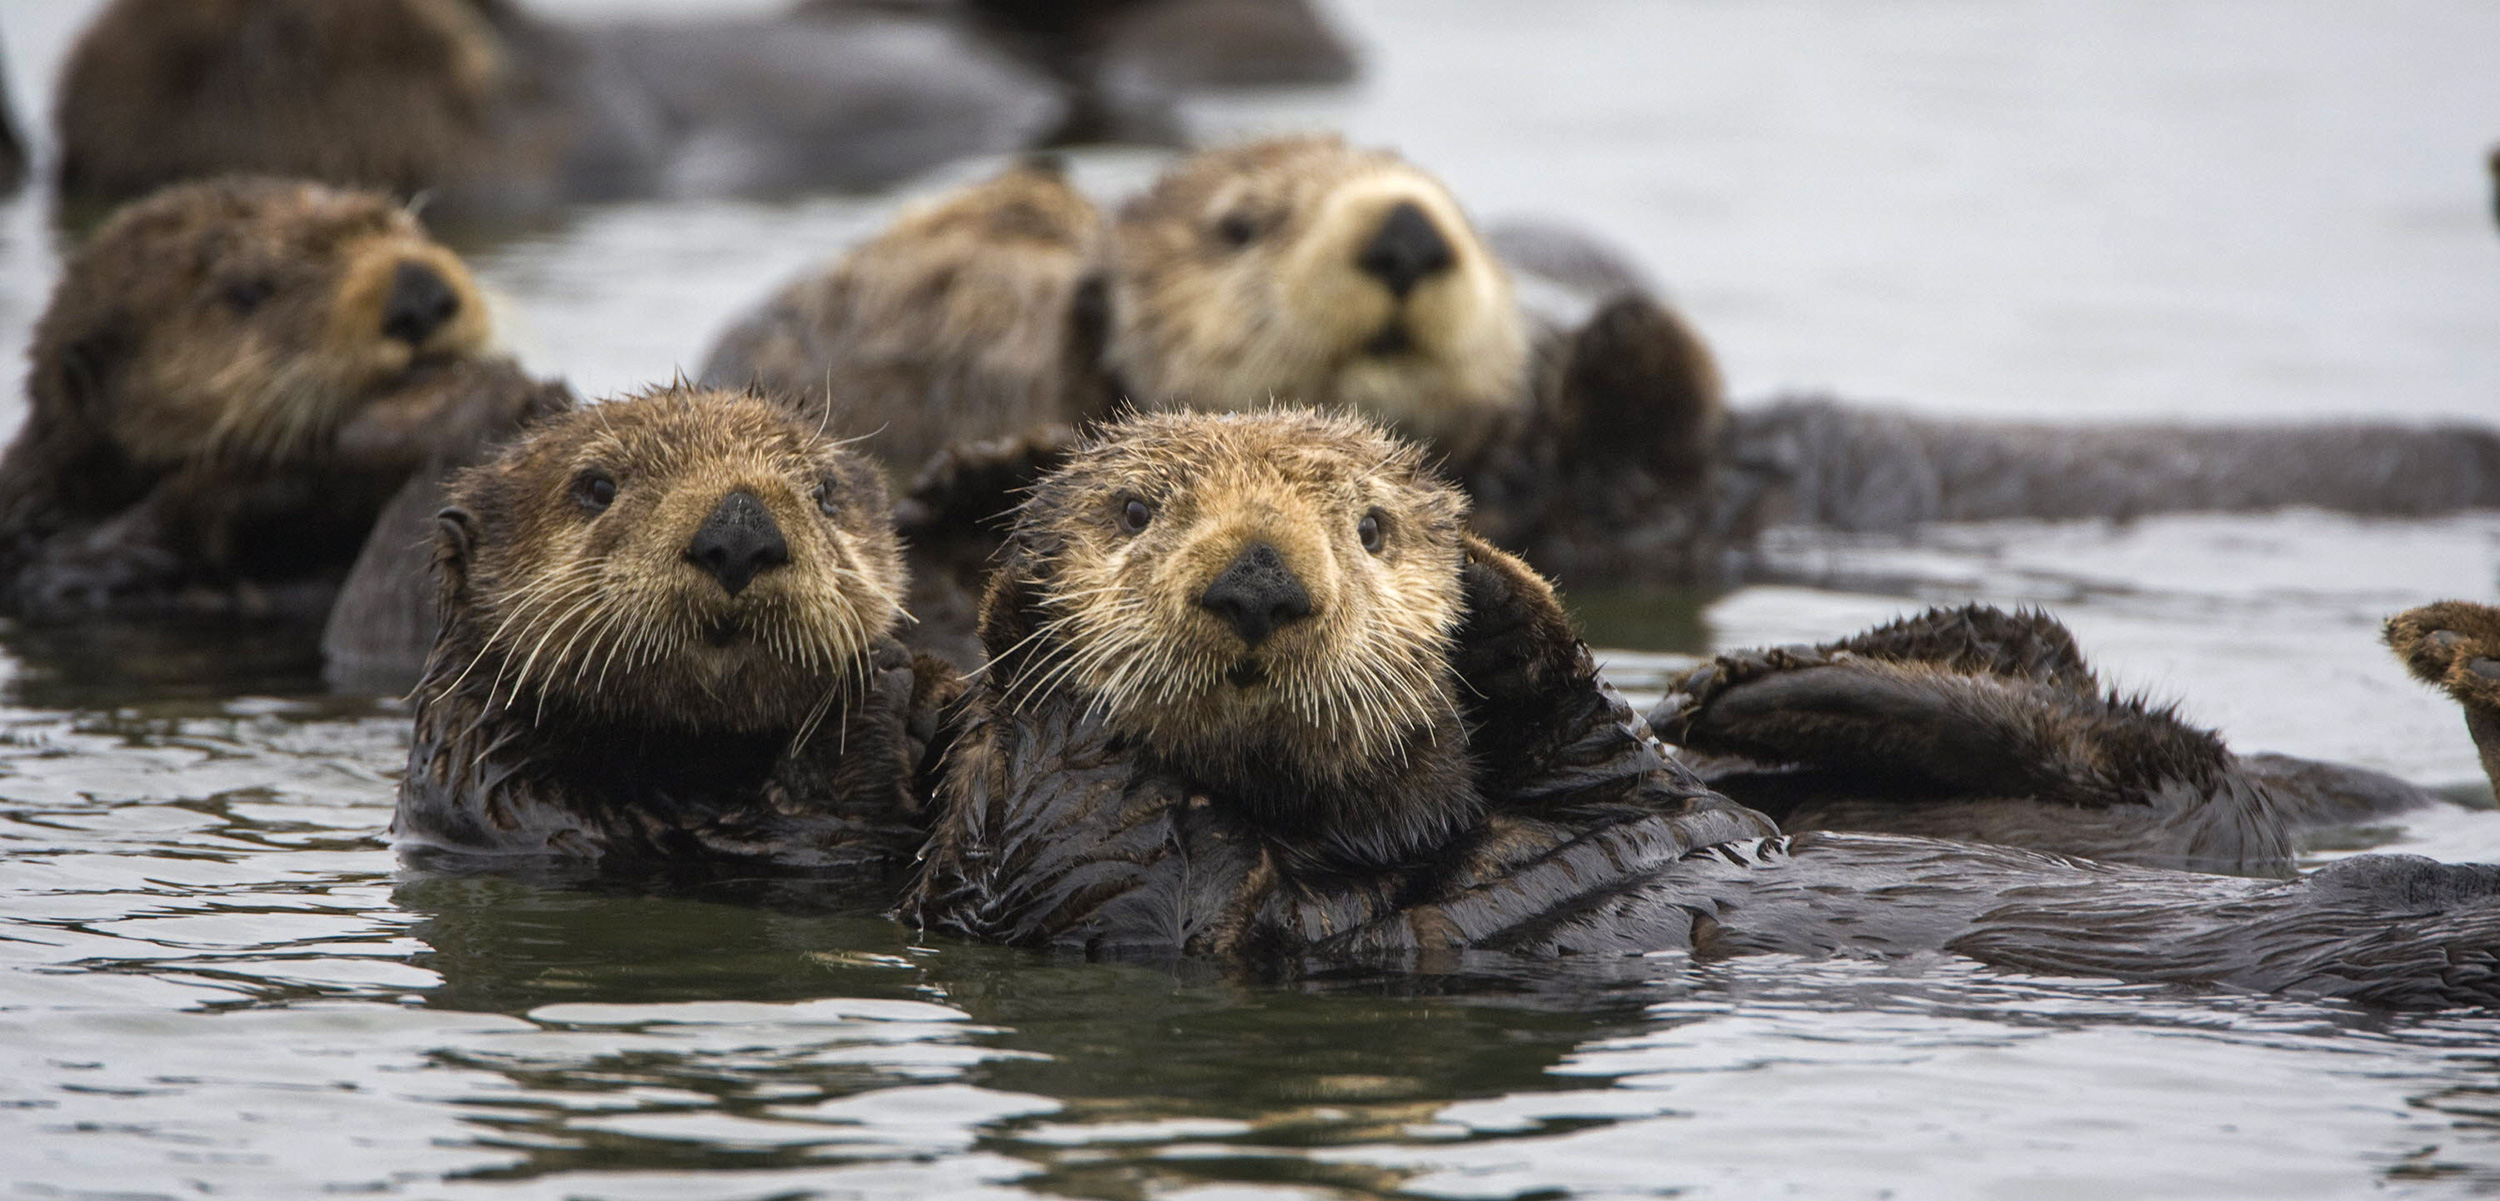 Marine Otter size, range, habitat, facts, food chain, scientific name, vs sea otter, baby, adorable